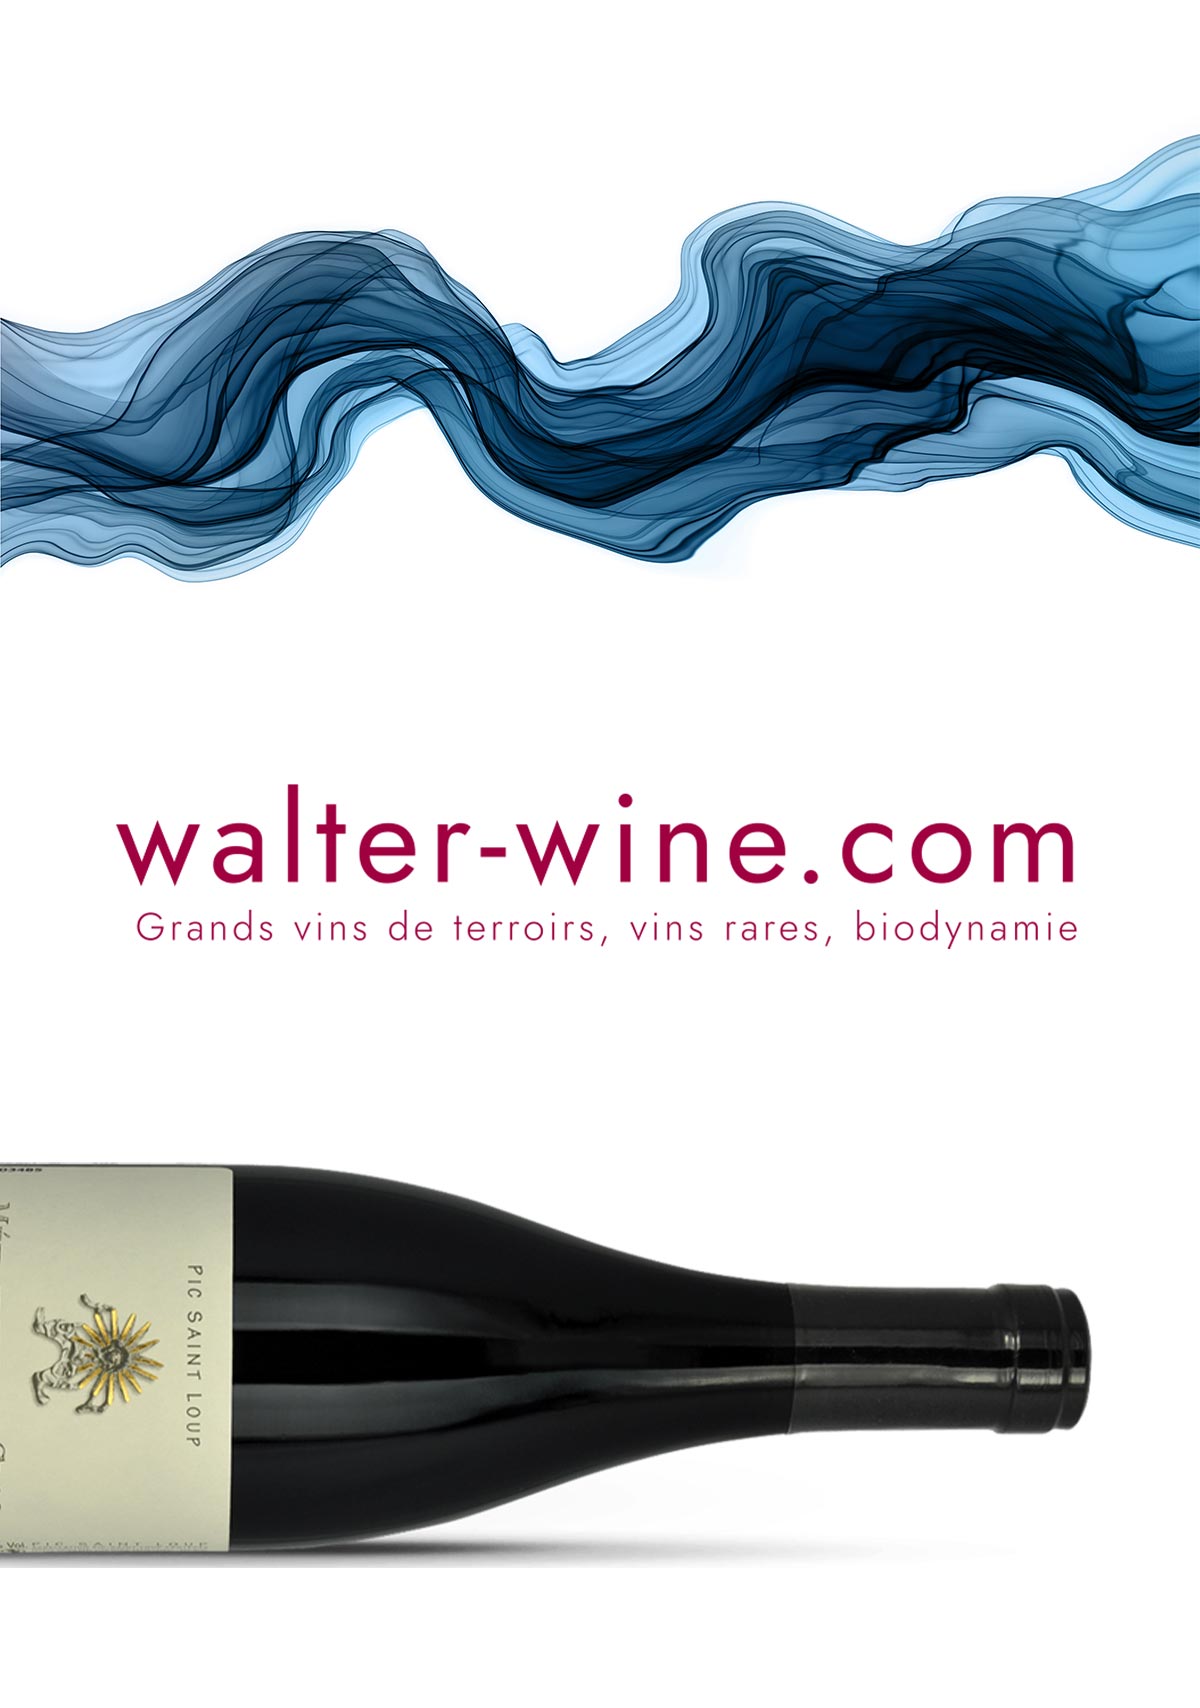 walter wine